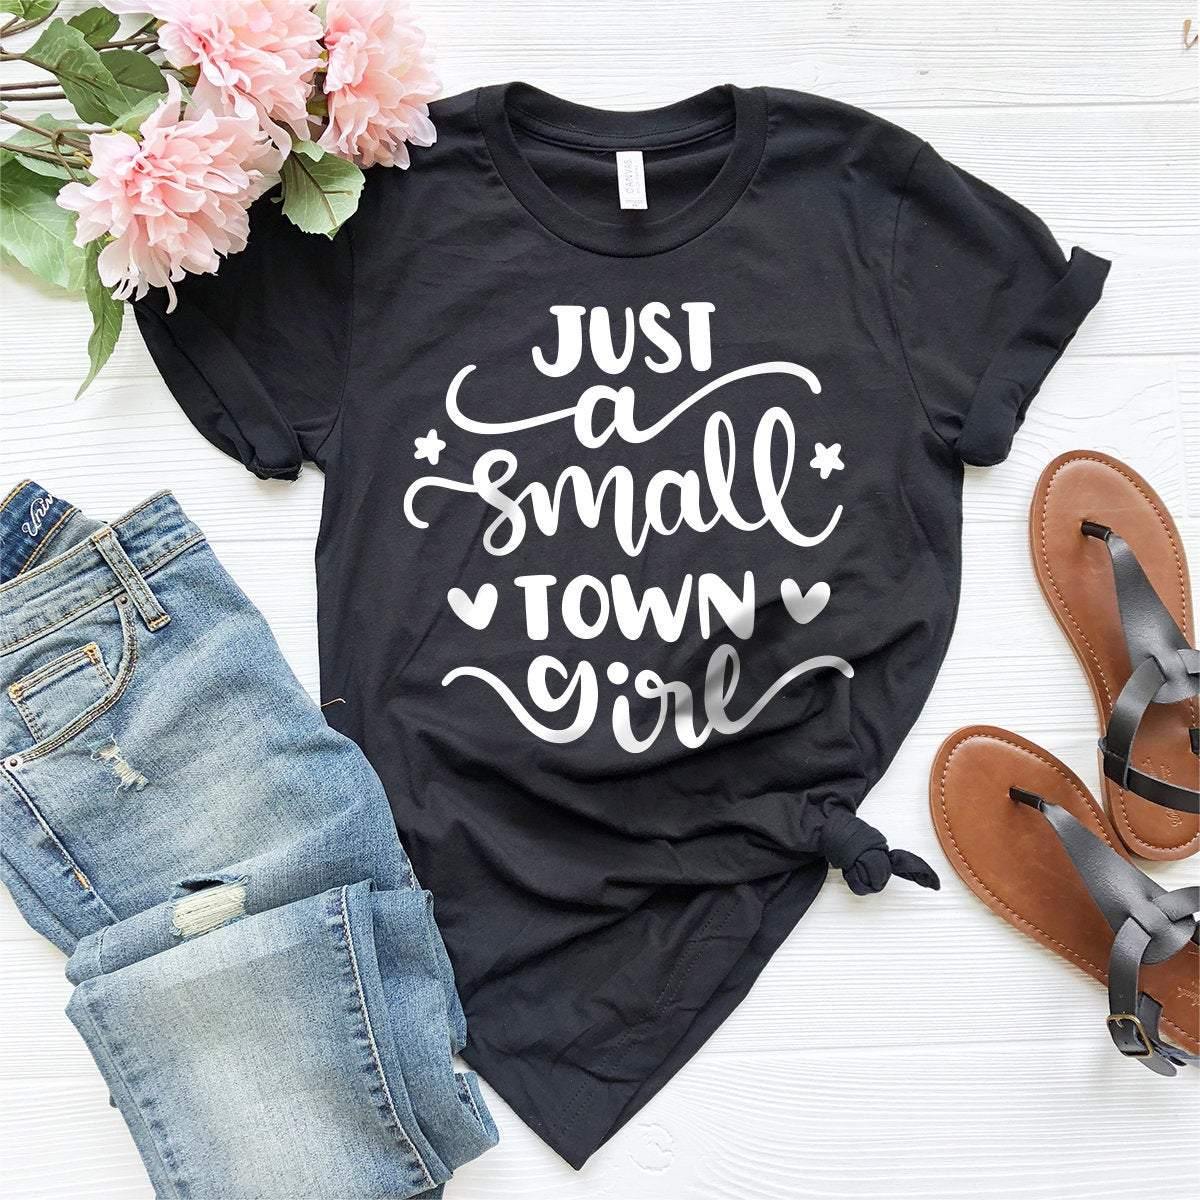 Country Girl Shirt, Southern Girl Shirt, Western Girl Shirt, Just A Small Town Girl Shirt, Cowgirl Shirt, Southern Shirt, Country Concert - Fastdeliverytees.com